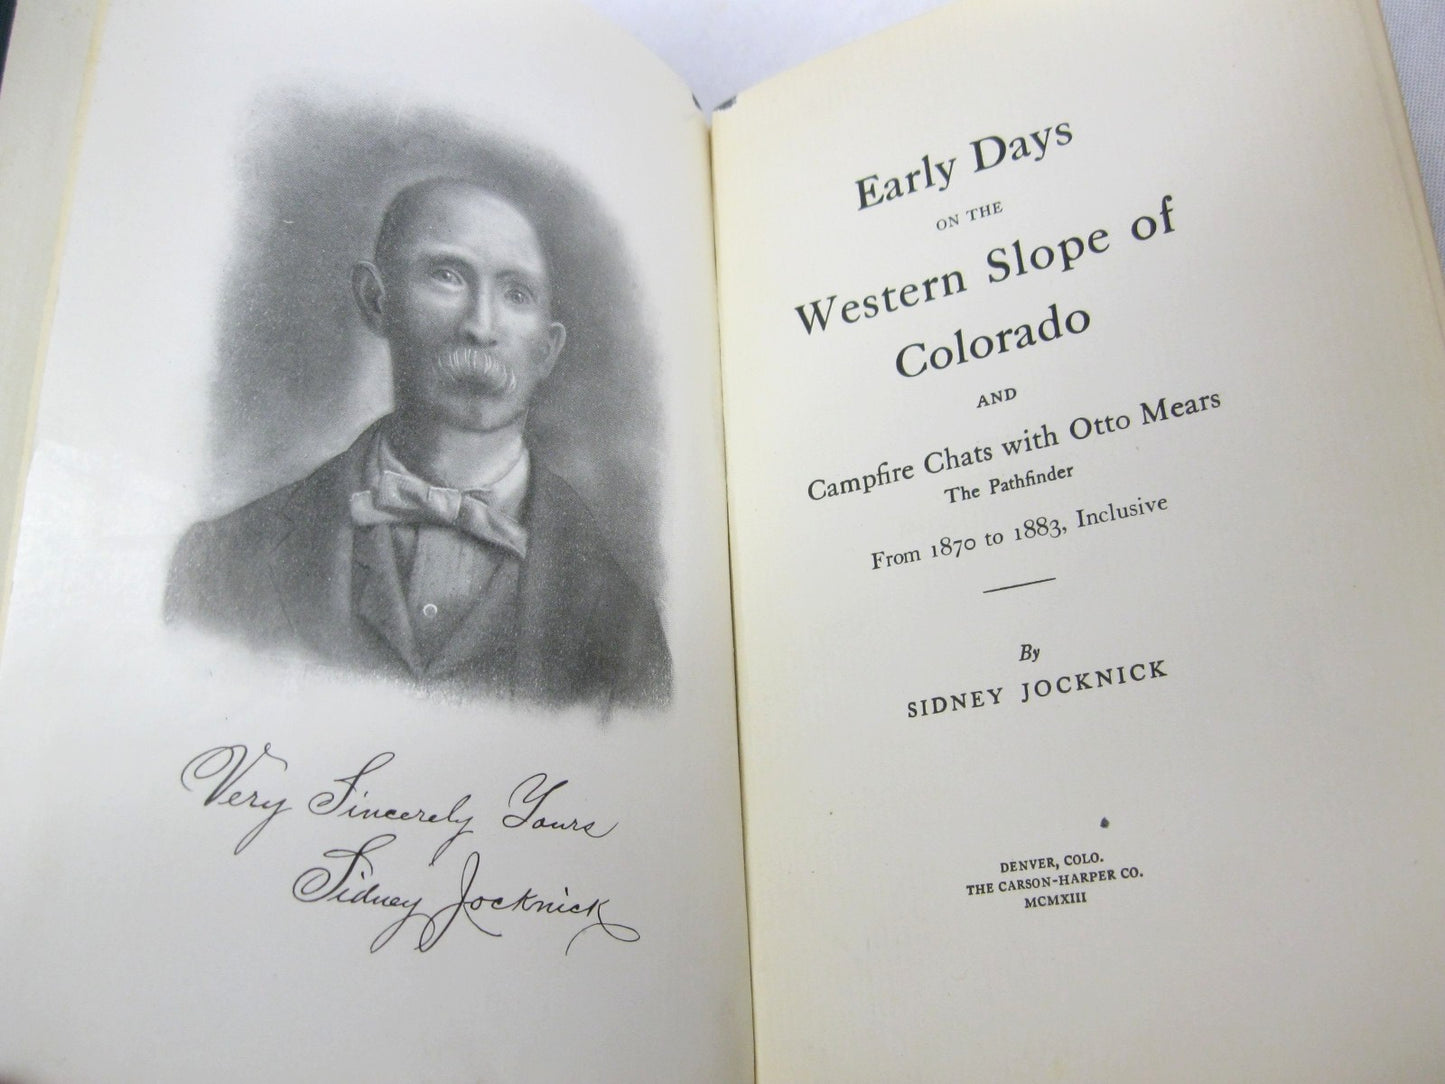 Early Days on the Western Slope of Colorado by Sidney Jocknick